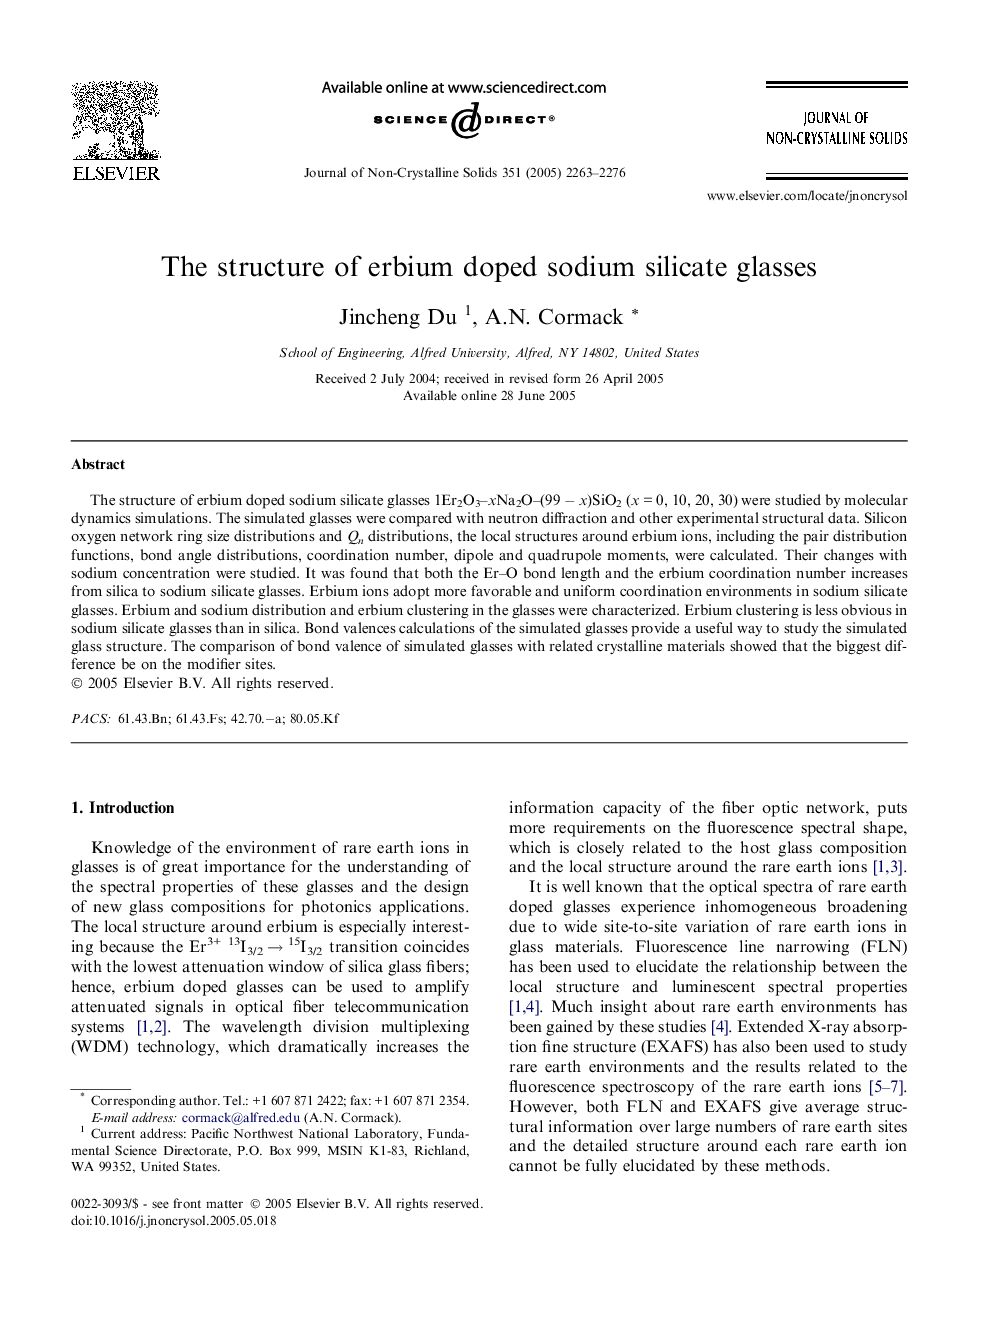 The structure of erbium doped sodium silicate glasses